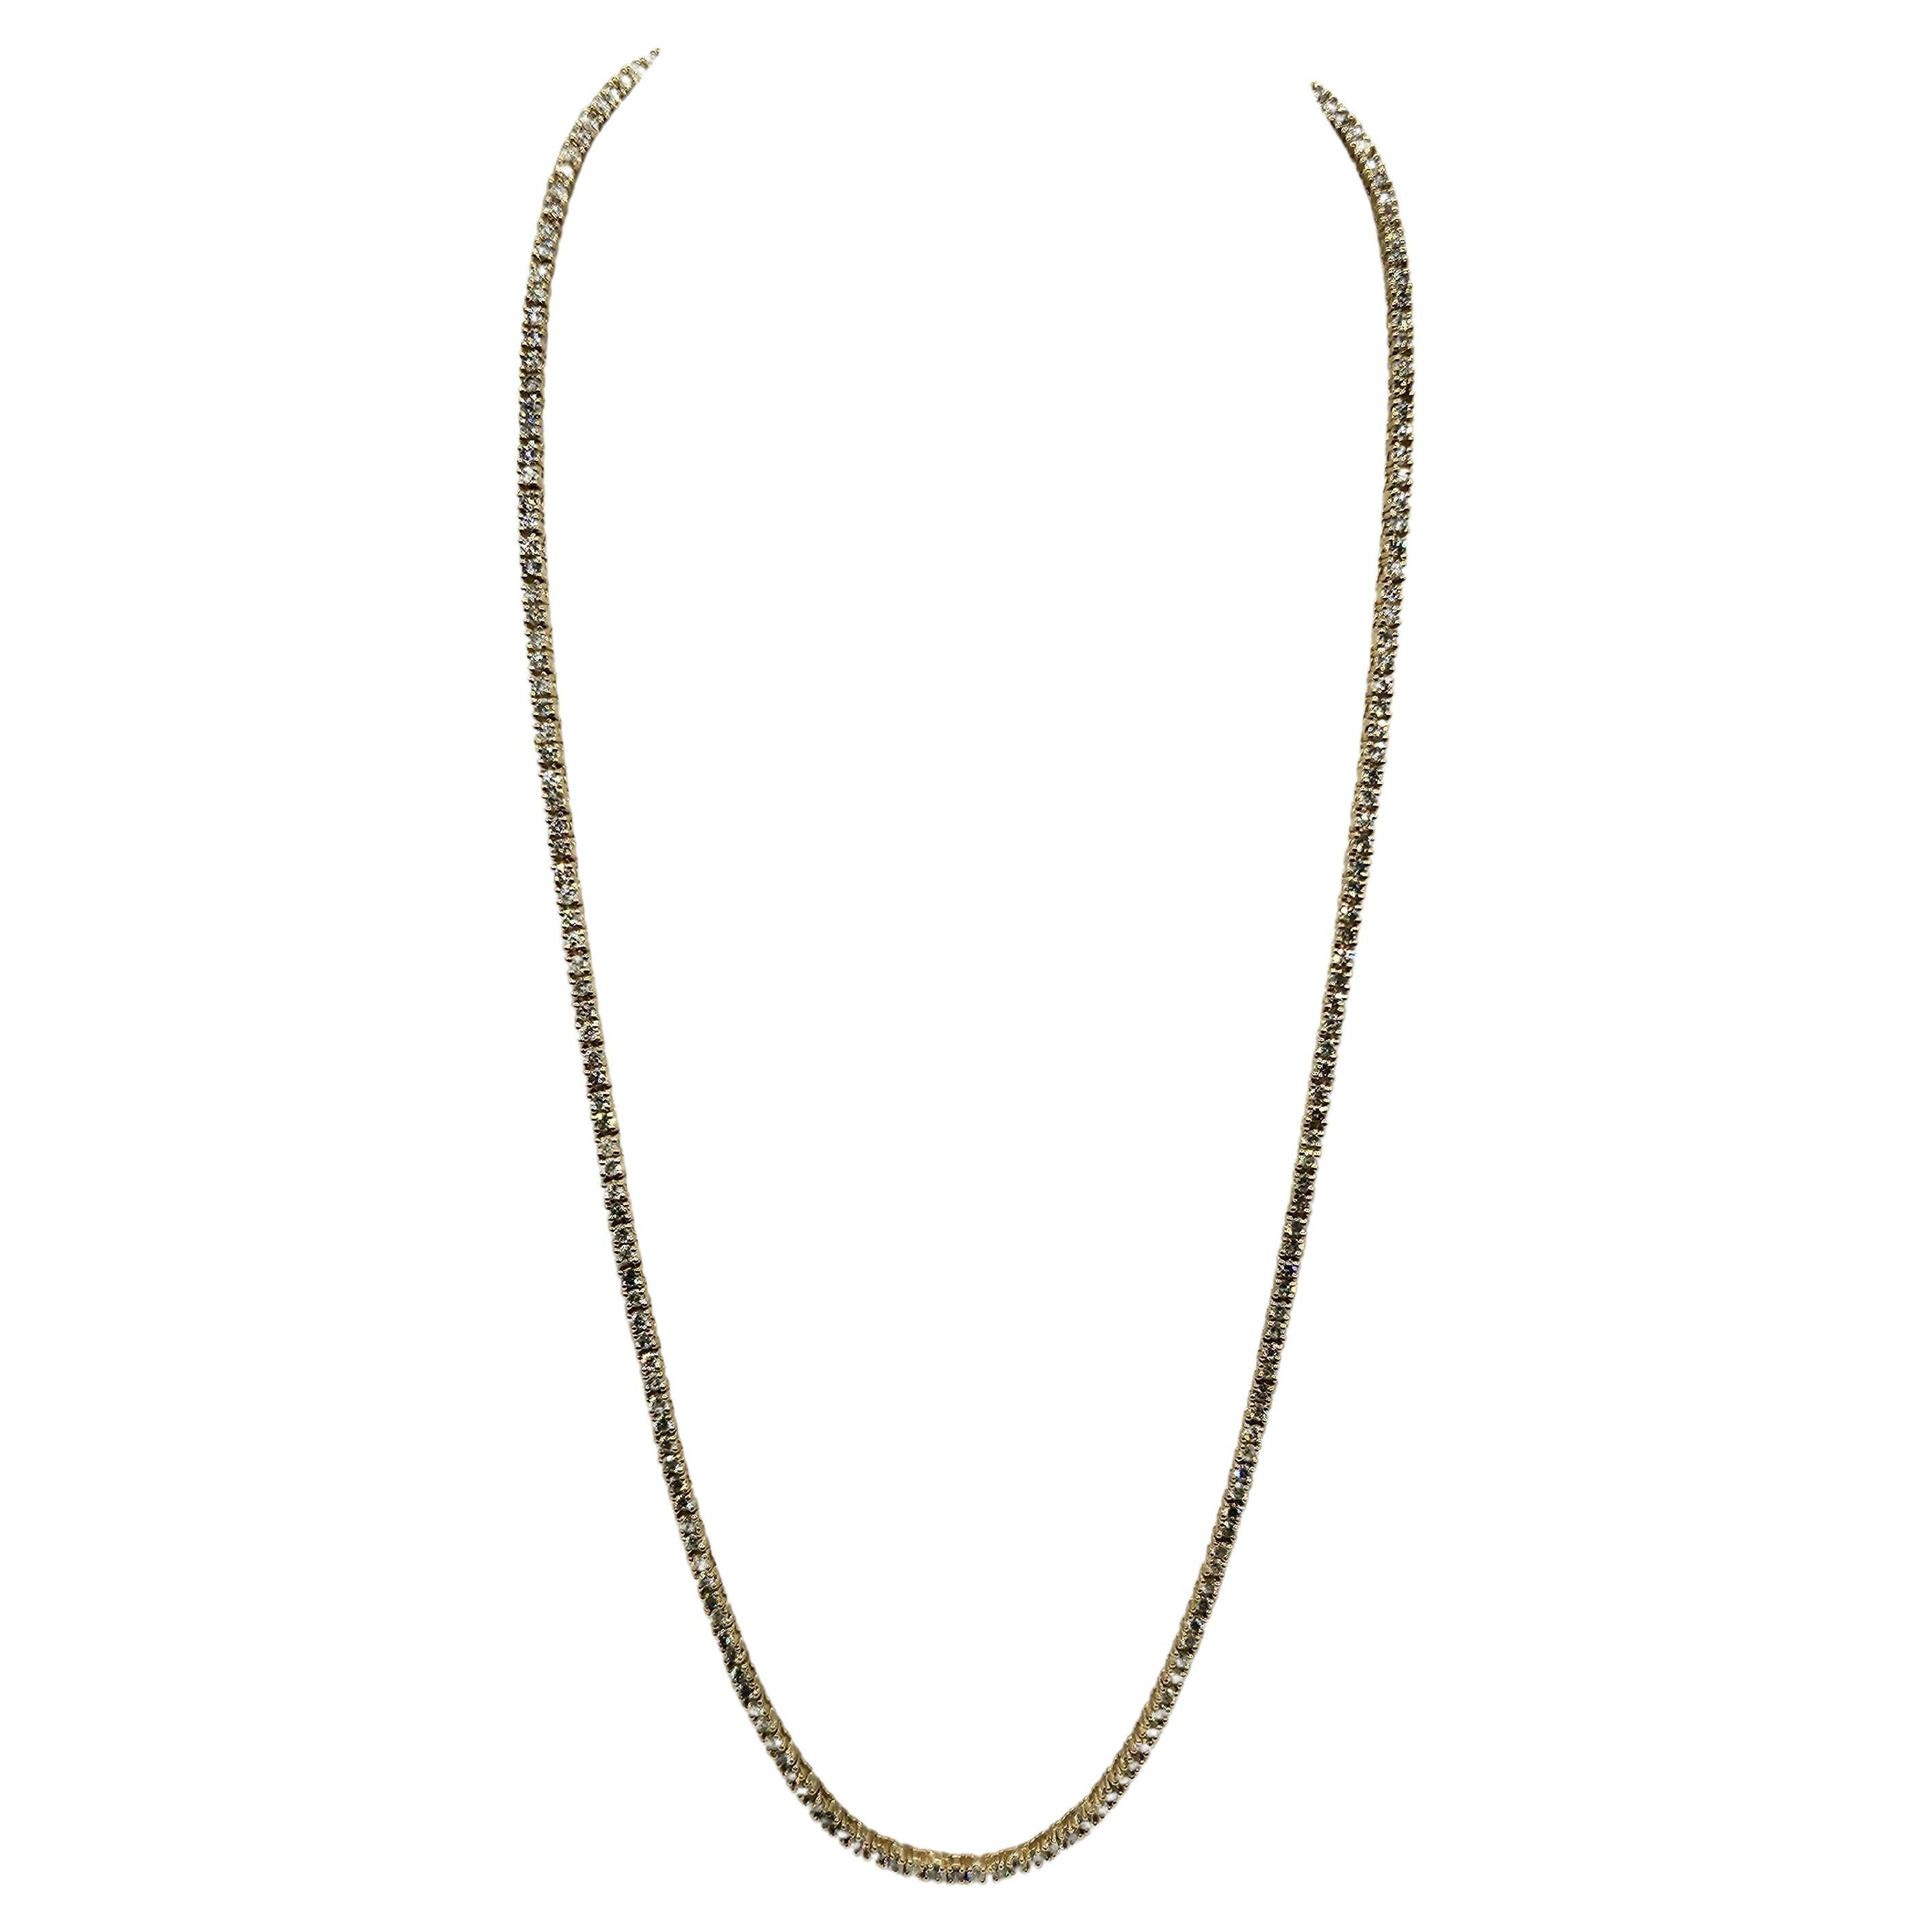 8.90 Carat Brilliant Cut Diamond Tennis Necklace 14 Karat yellow Gold 22''